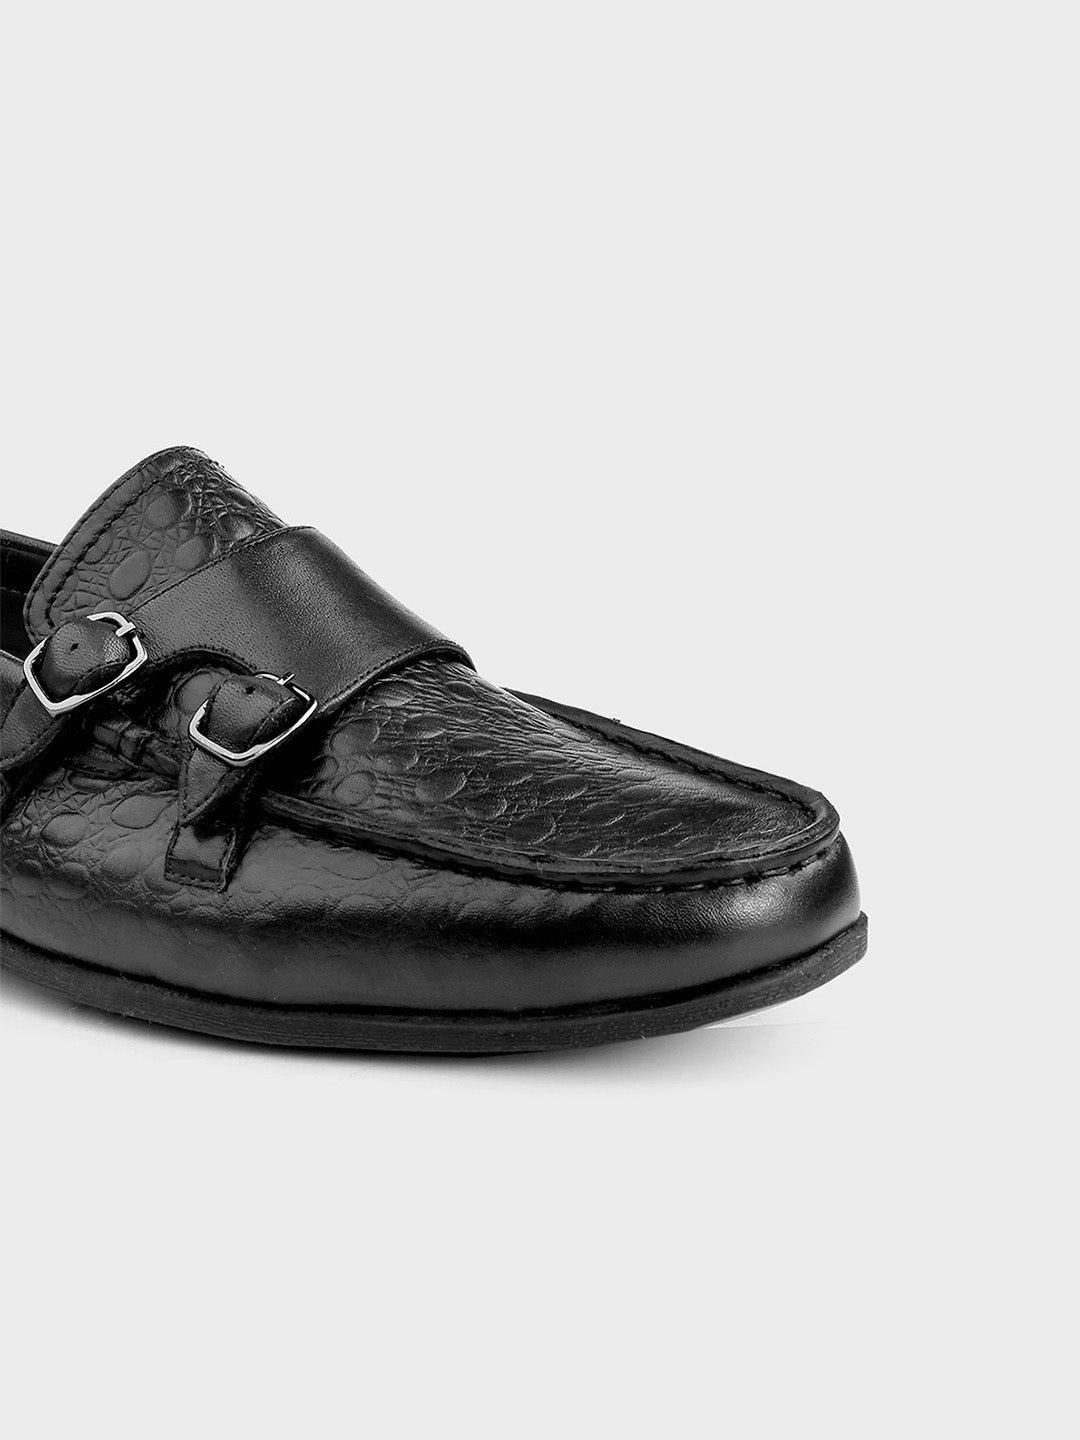 Men's Black Leather Slip-on Monk Shoes